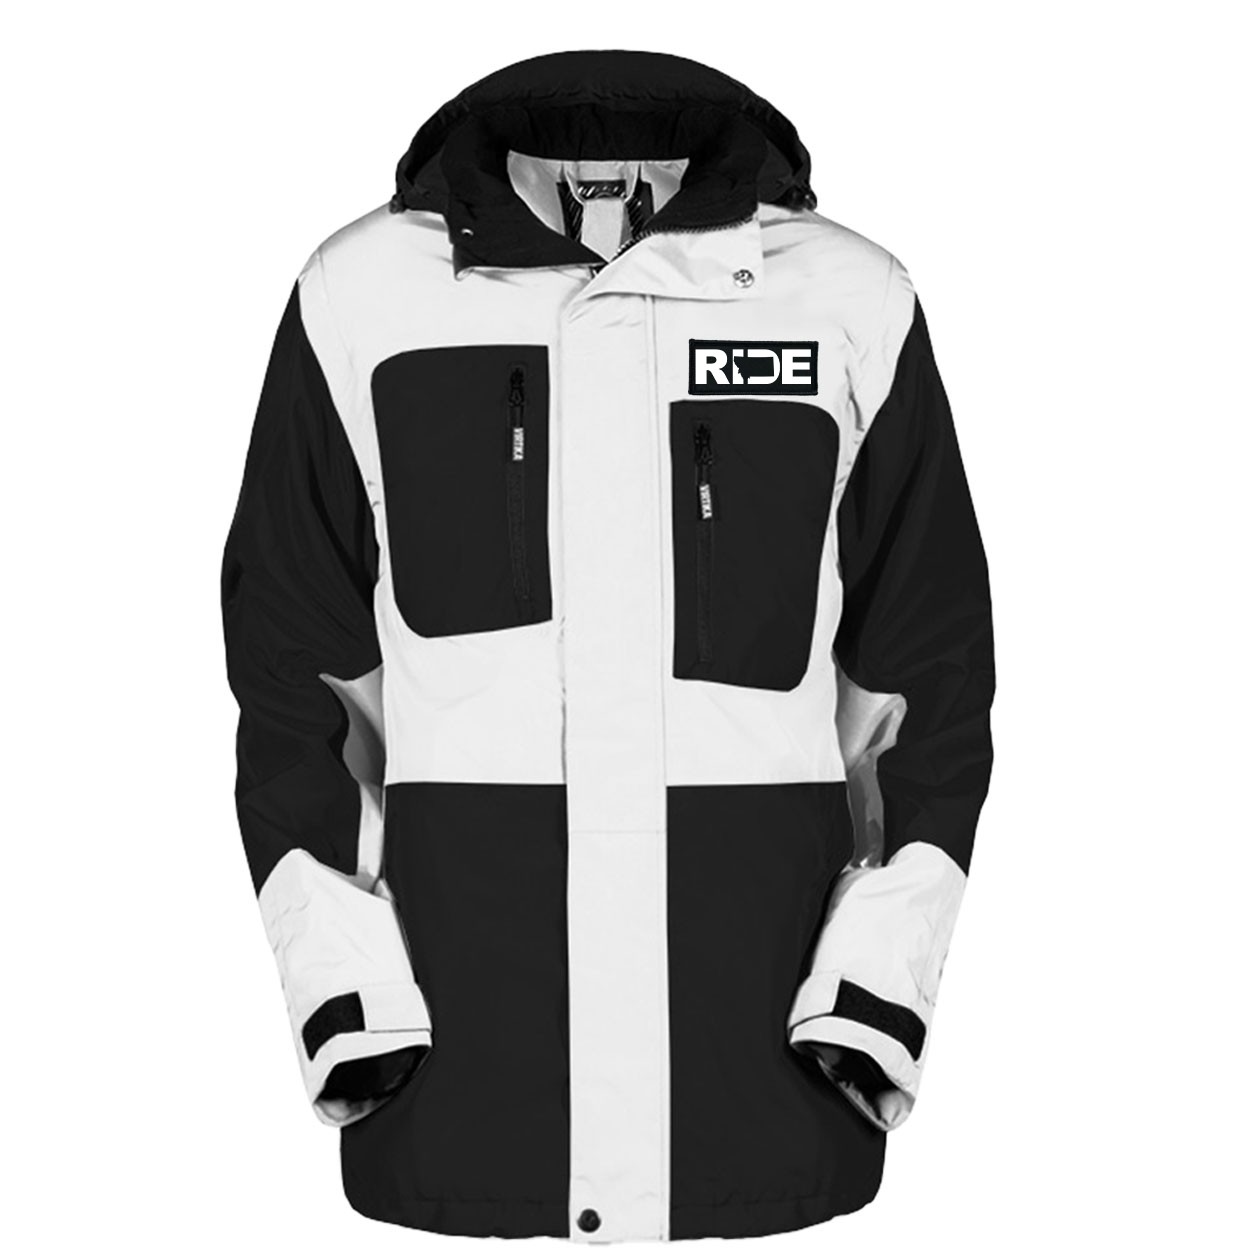 Ride Montana Pro Waterproof Breathable Winter Virtika Jacket Black/White (White Logo)